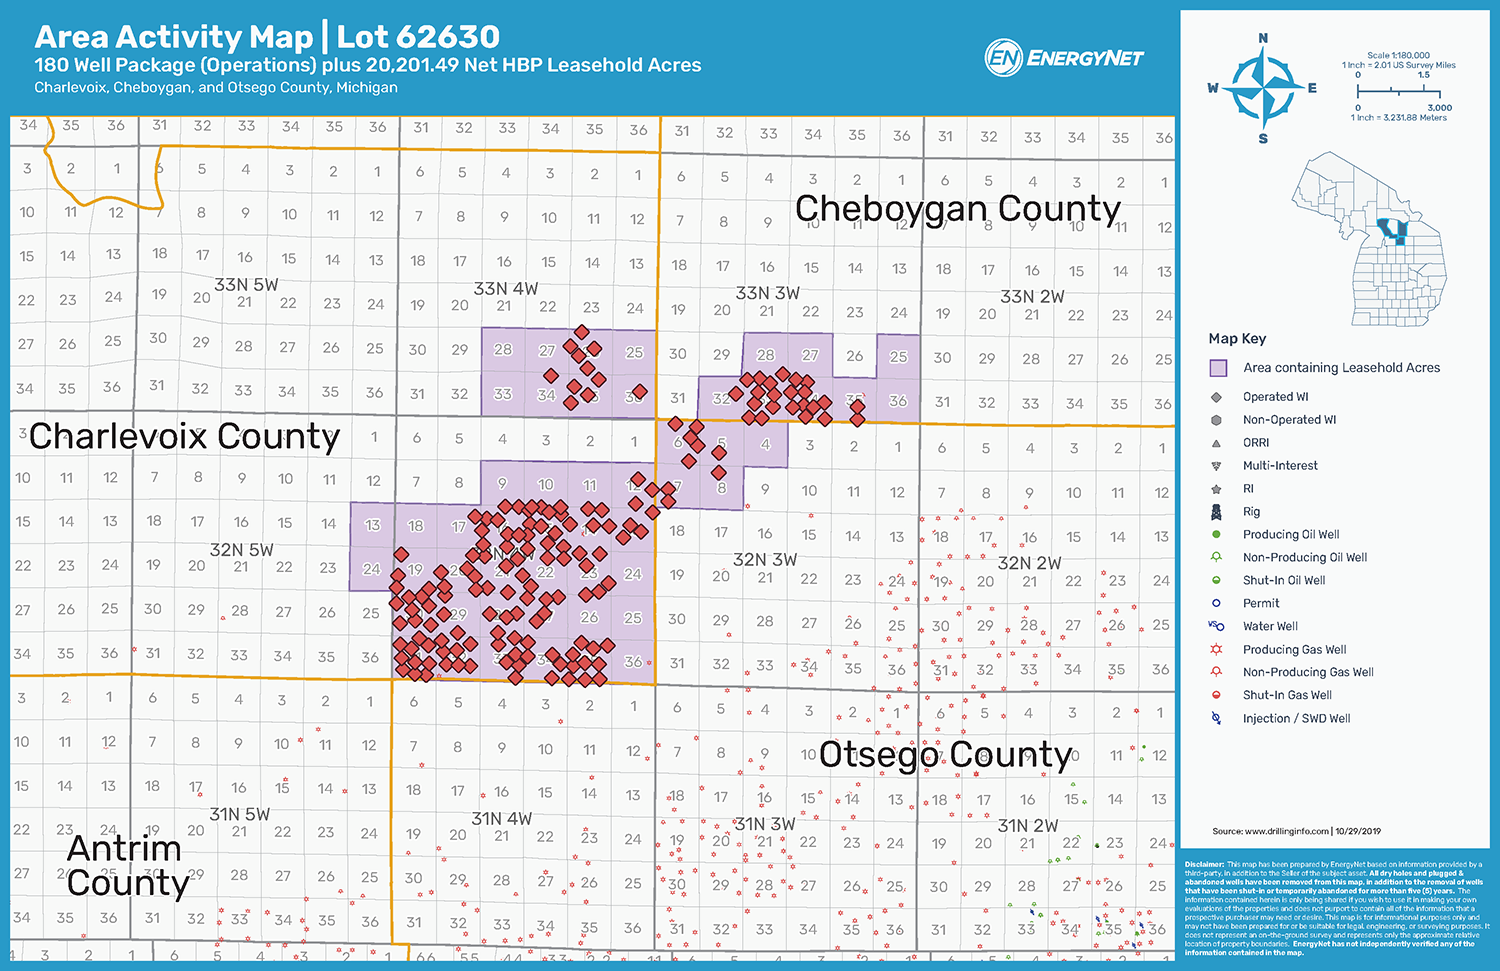 NorthStar Energy Michigan Asset Map, Alpena, Charlevoix, Cheboygan and Otsego Counties (Source: EnergyNet)